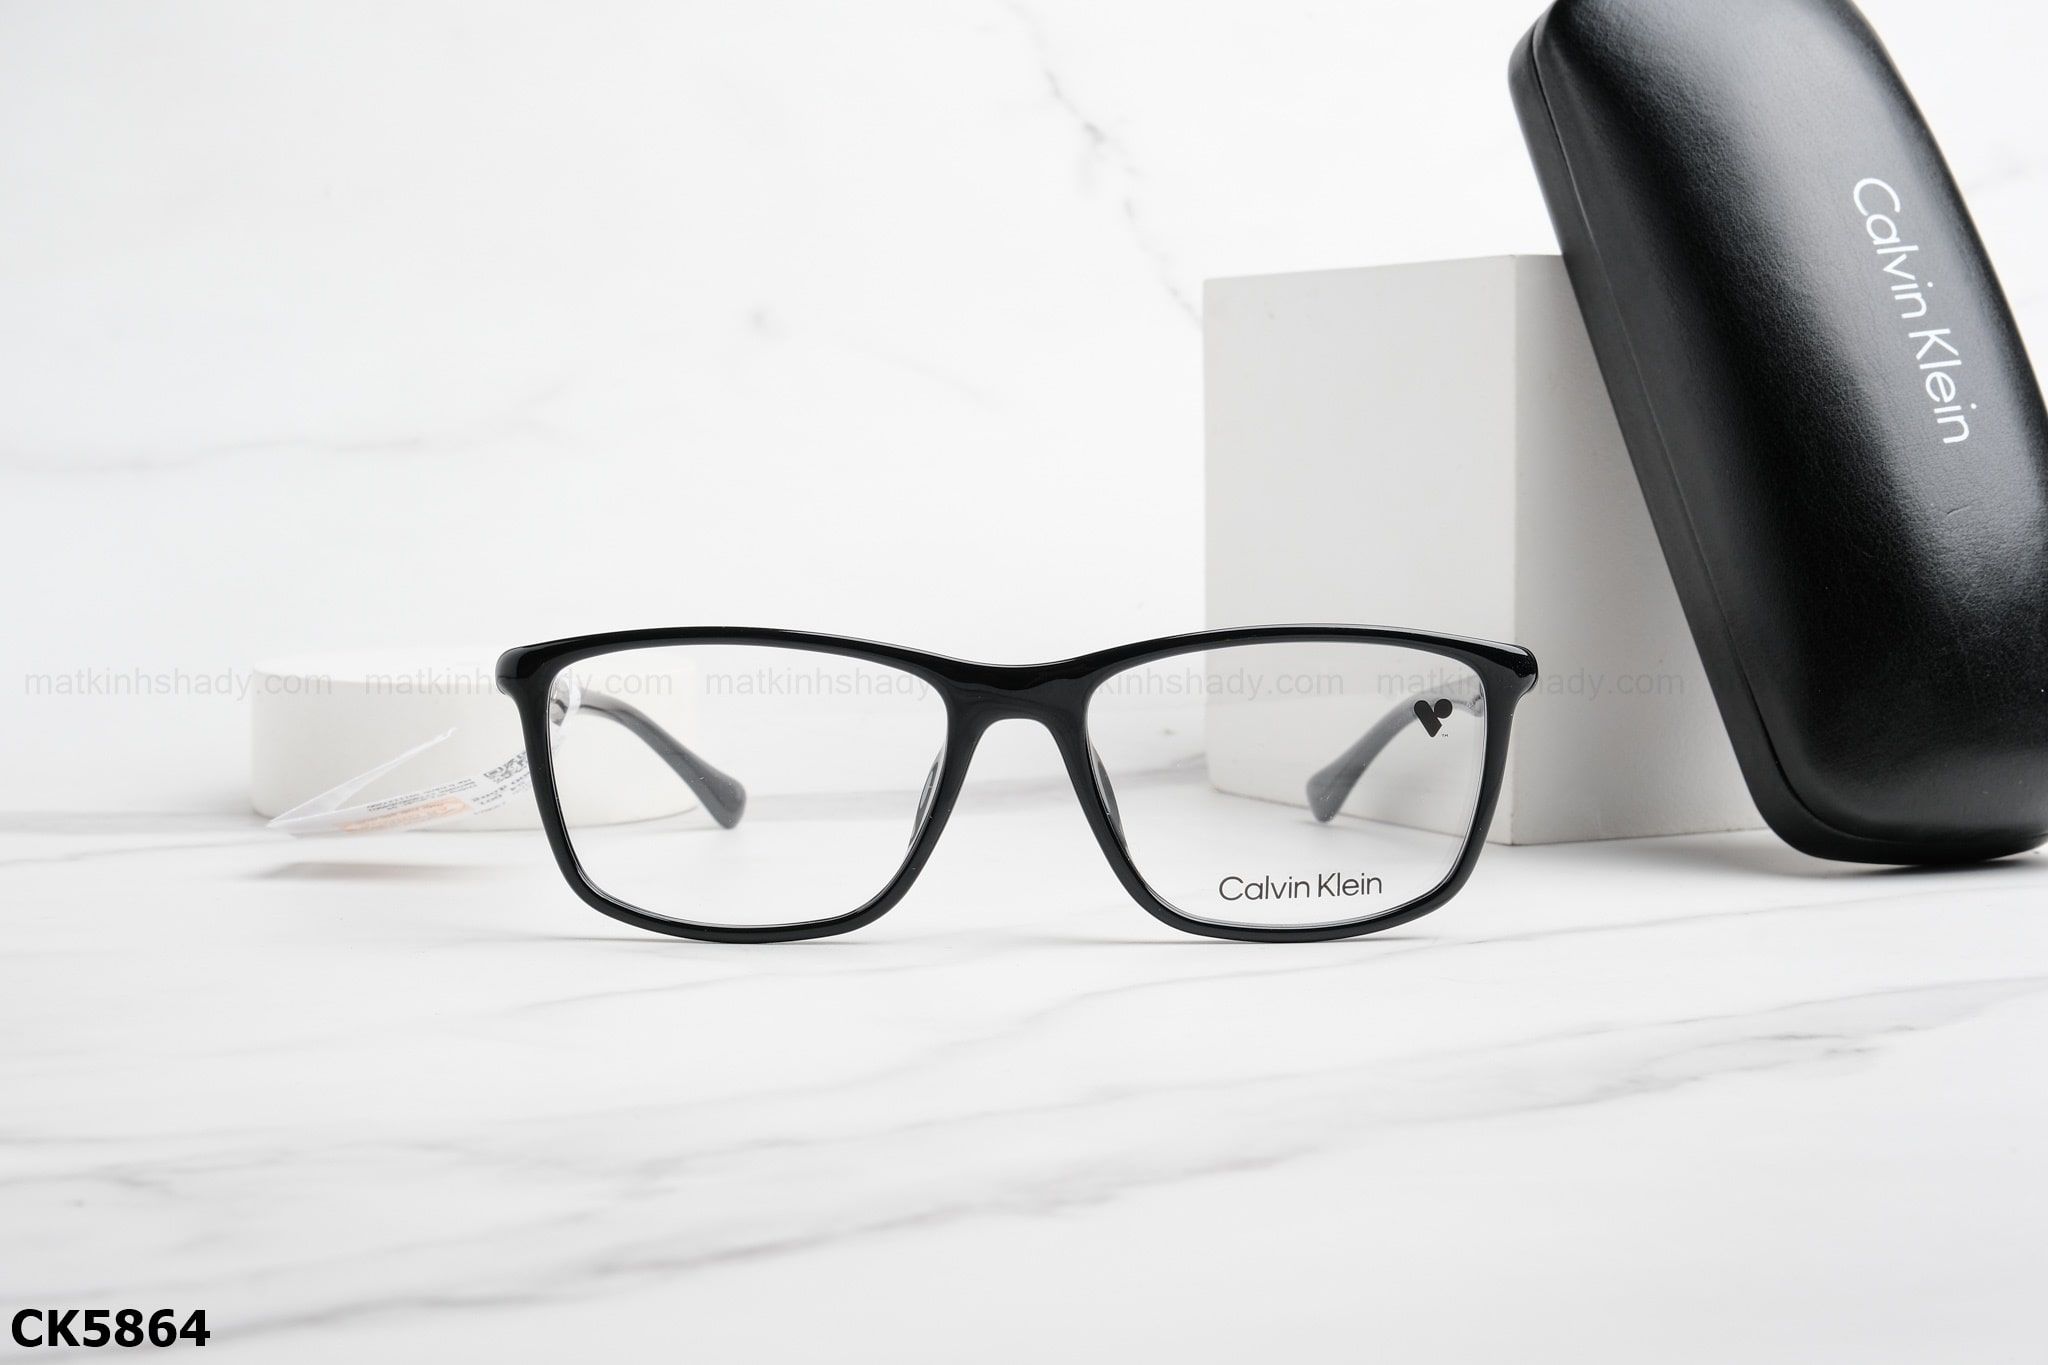  Calvin Klein Eyewear - Glasses - CK5864 